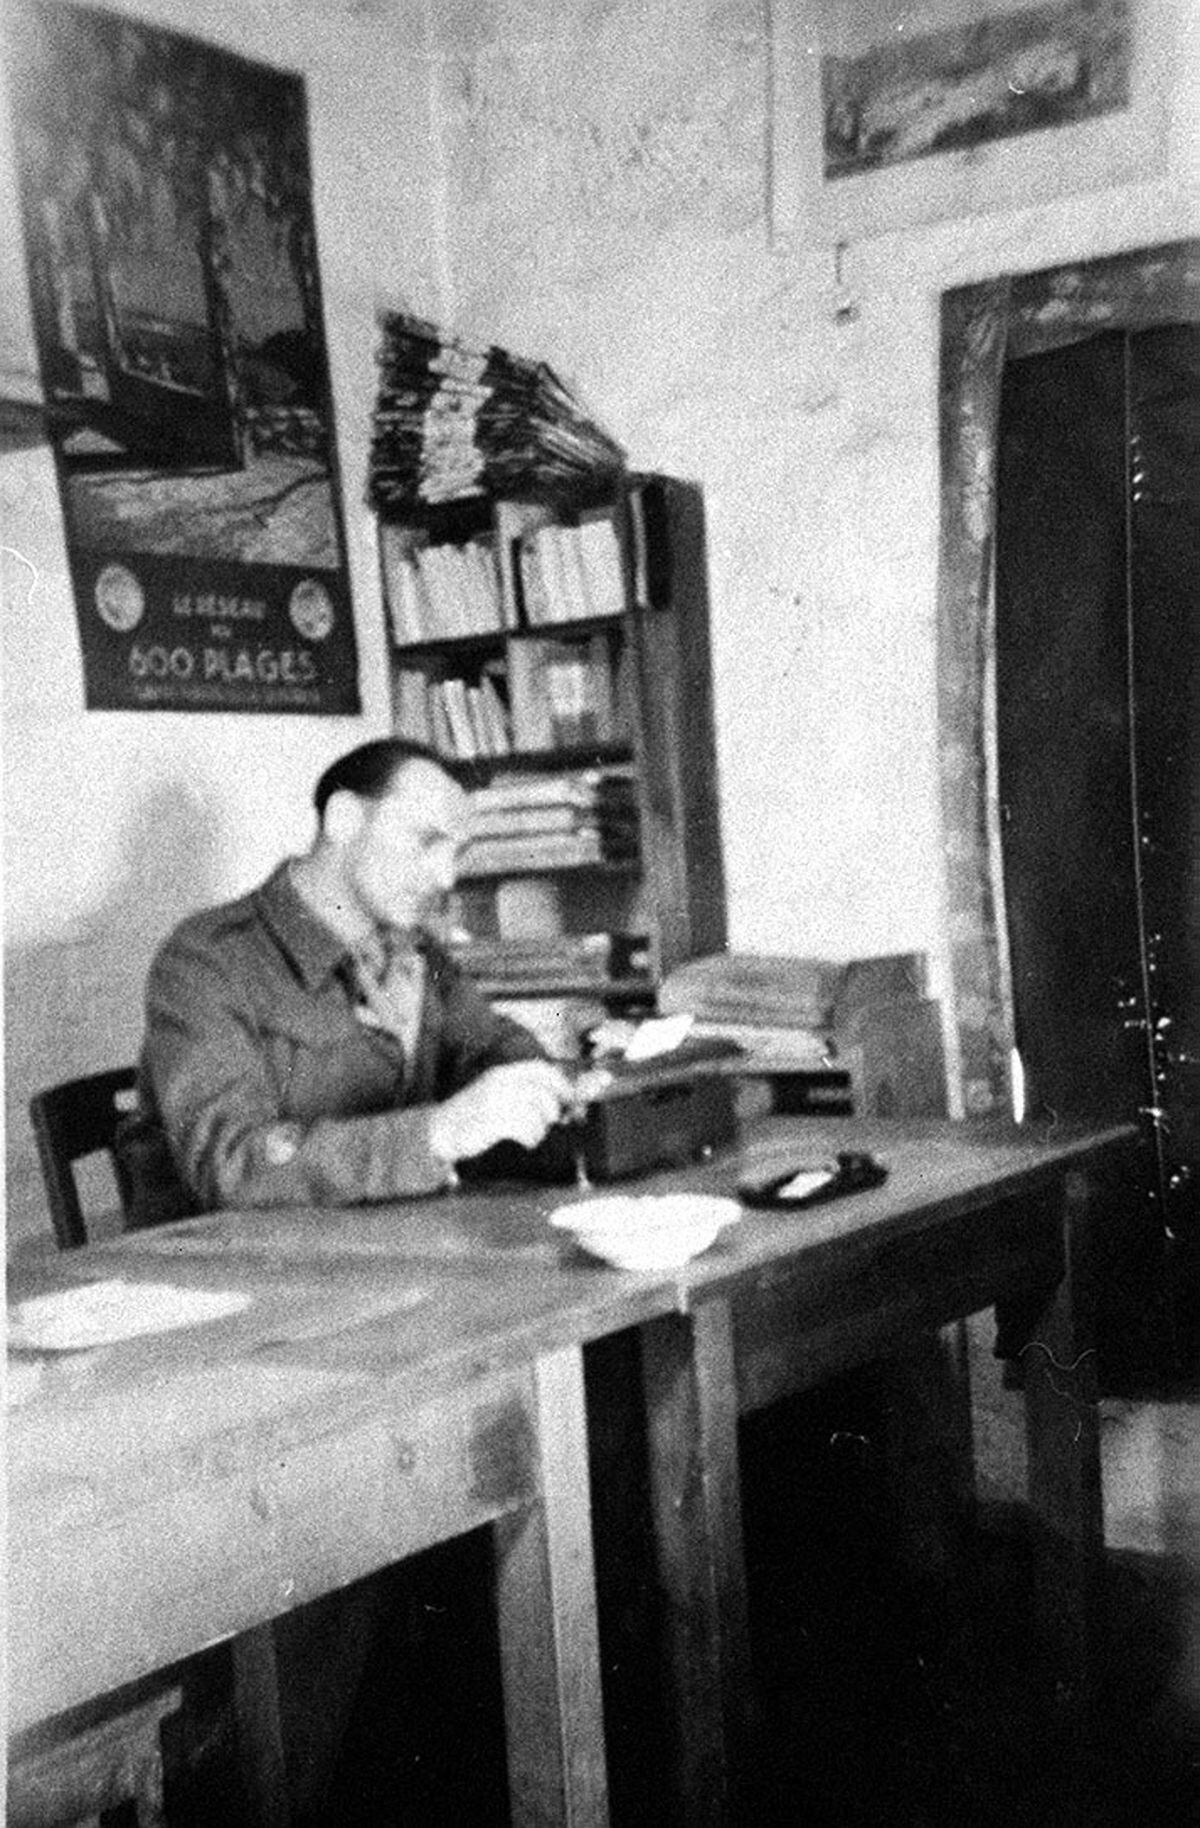 The prisoner editor at his editorial desk. 